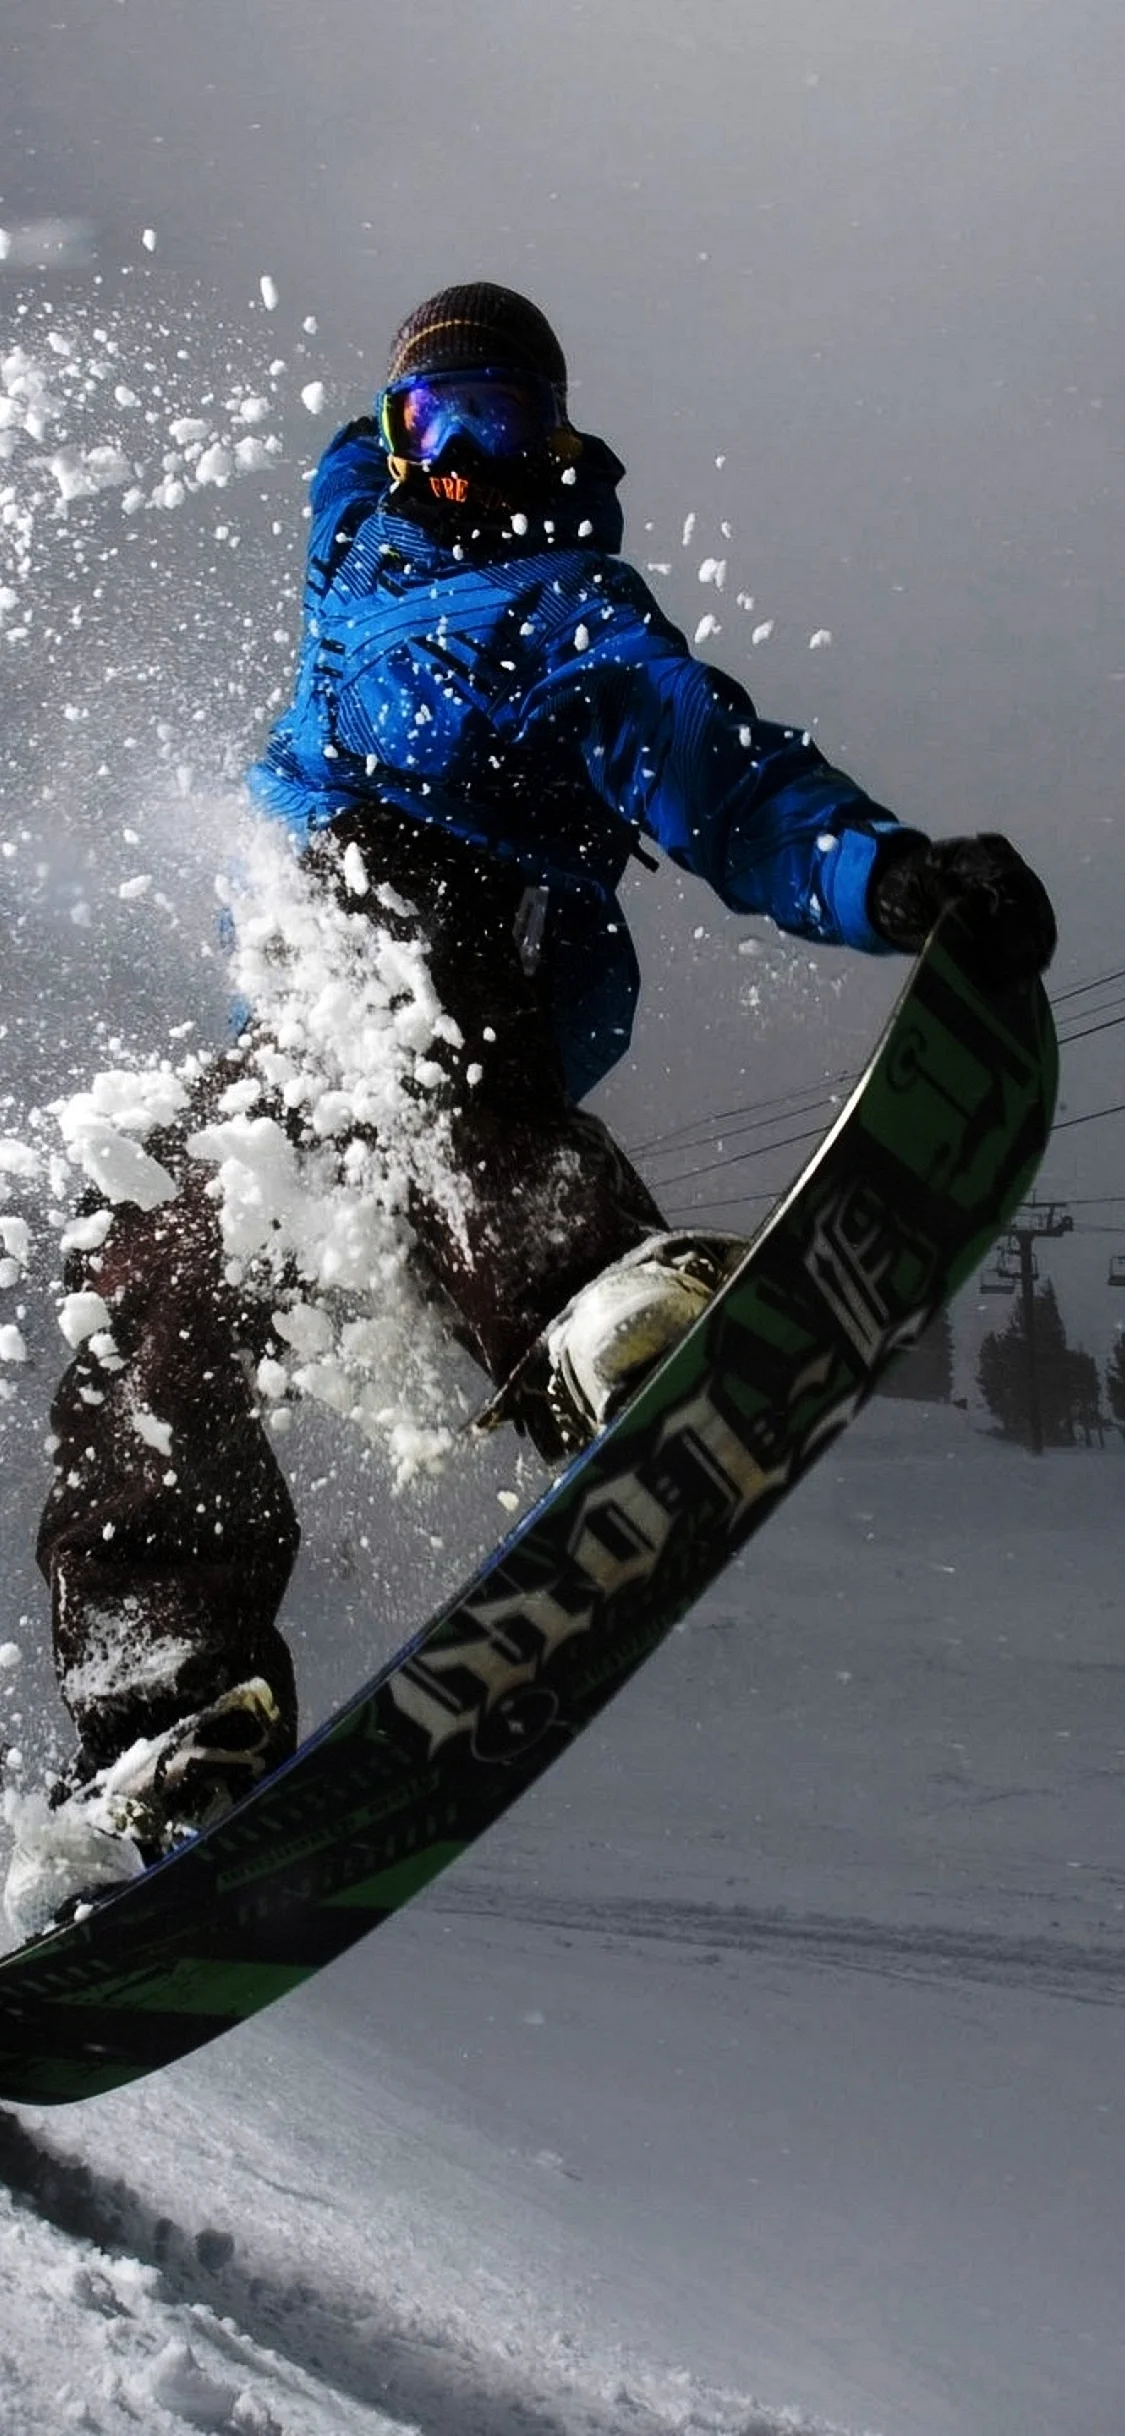 Snowboarding Burton Wallpaper for iPhone 11 Pro